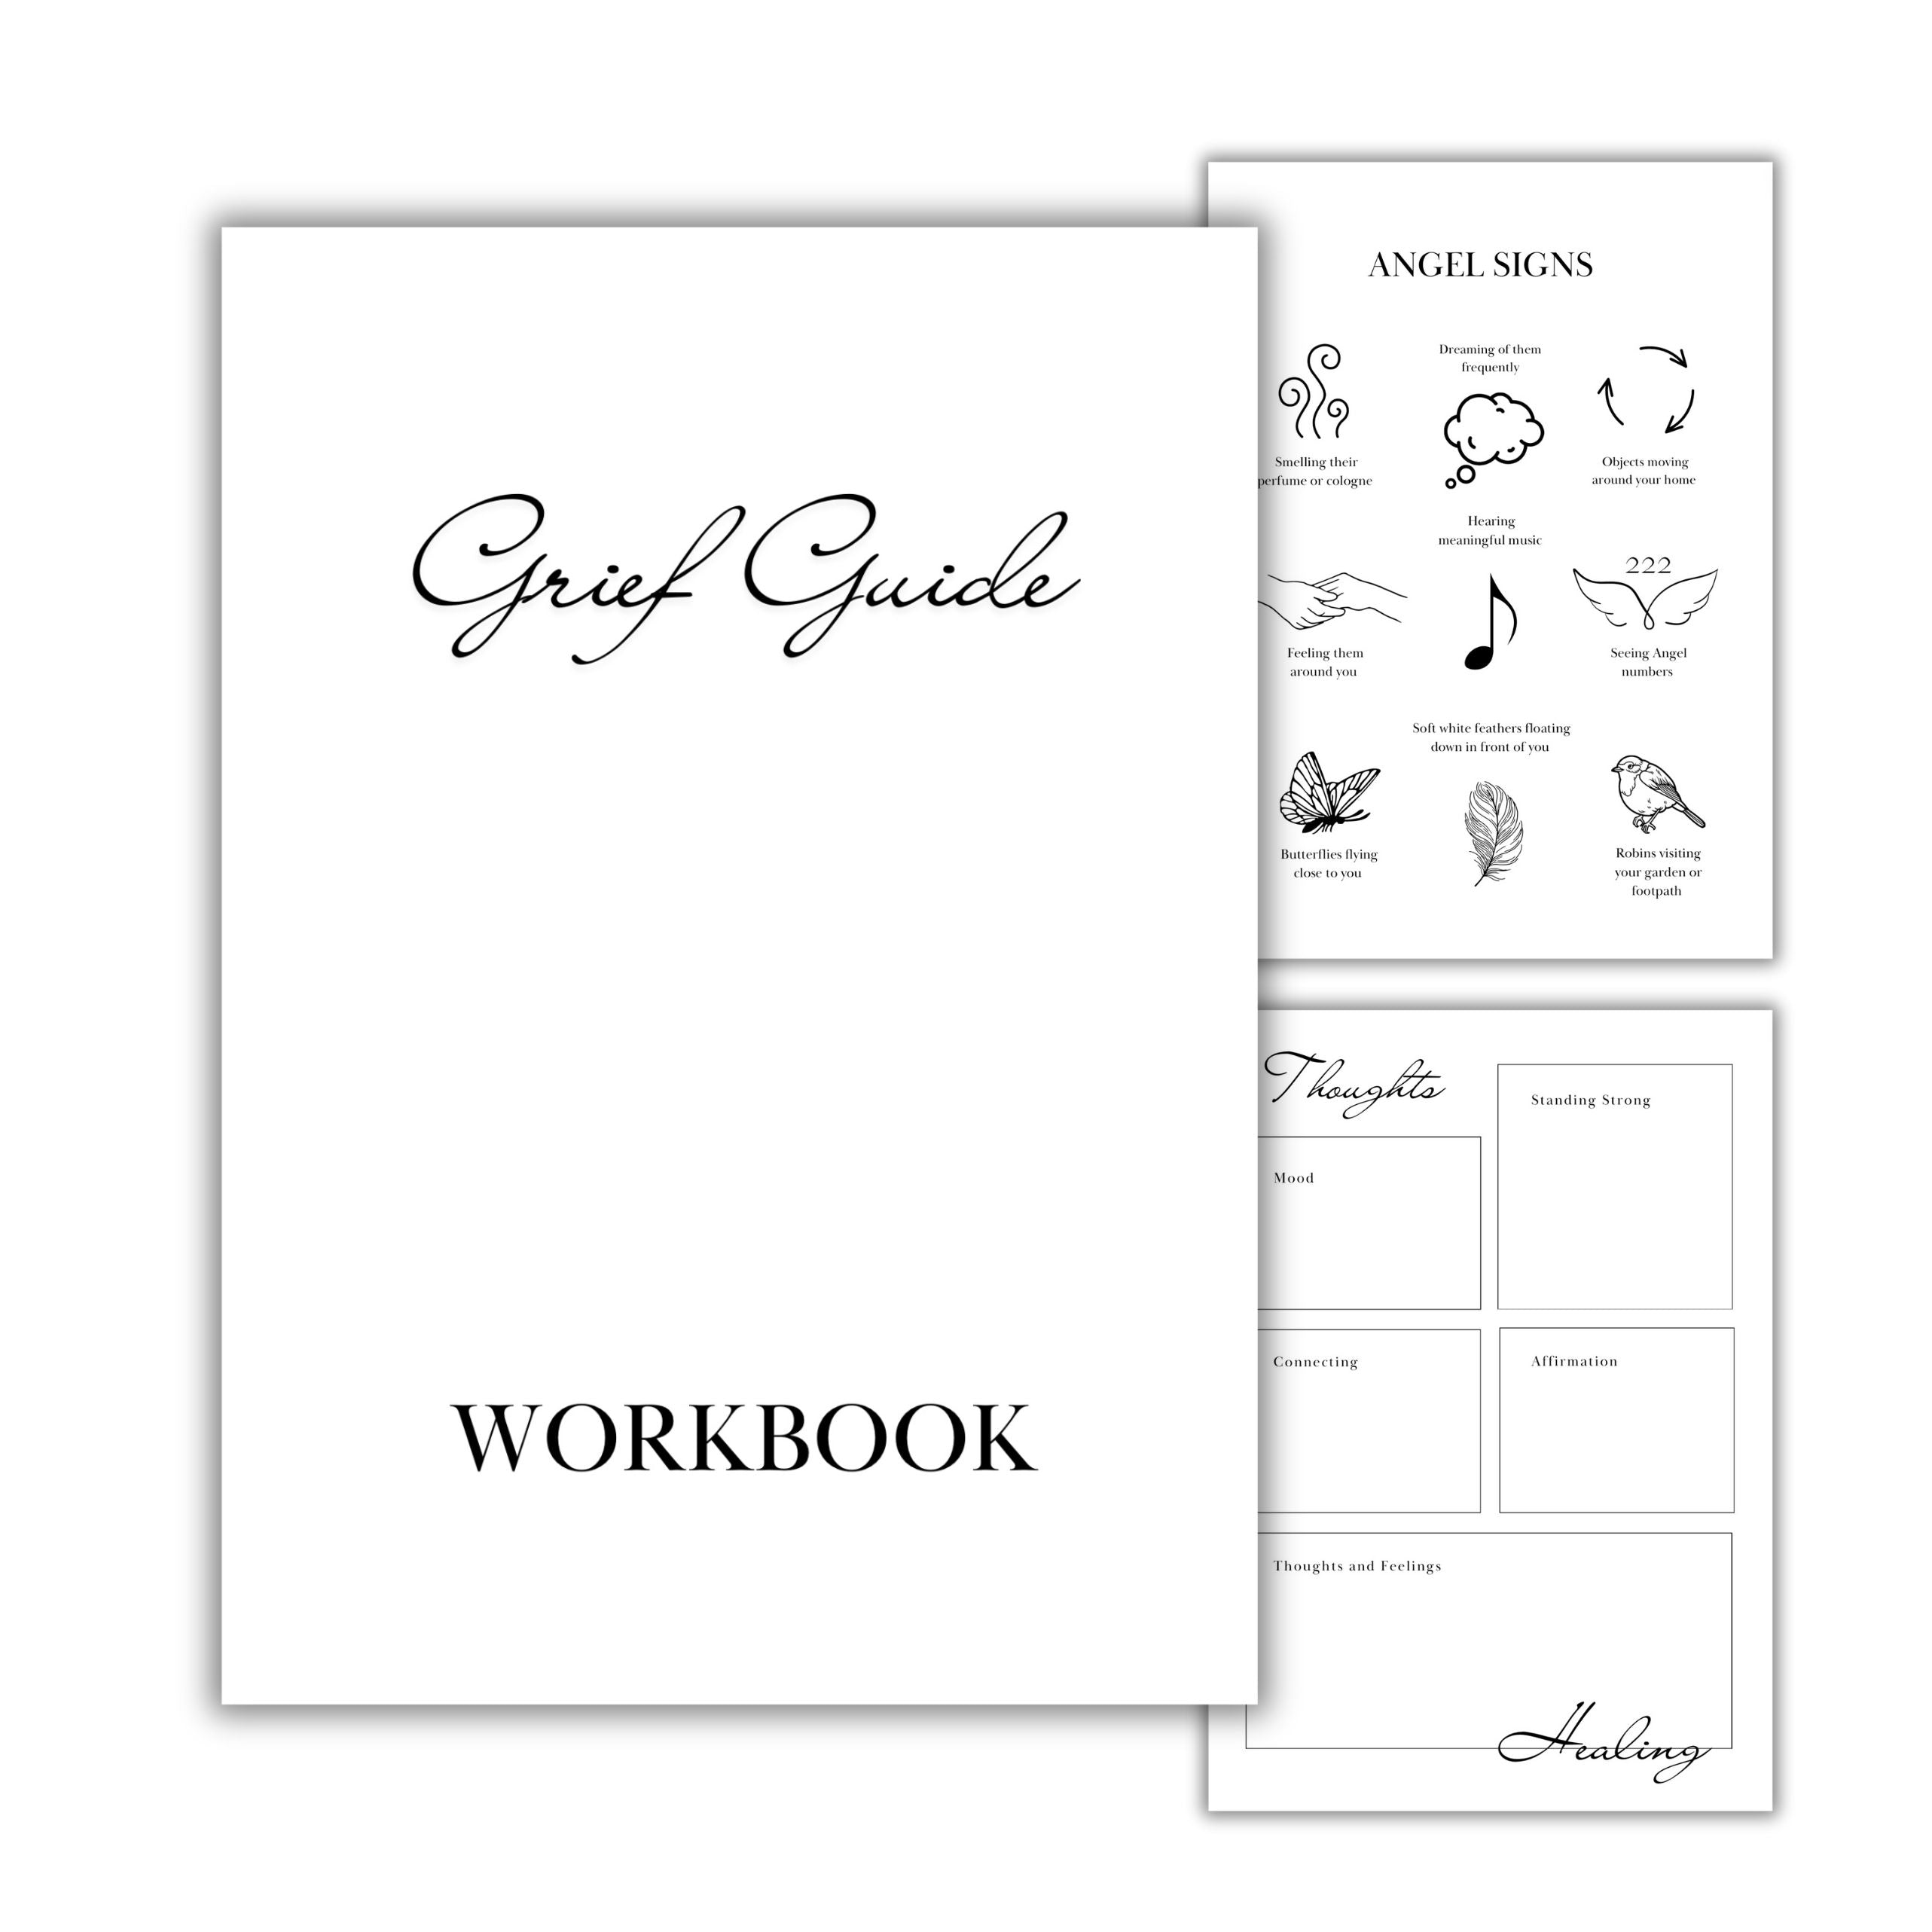 Grief Guide Journal Digital Download